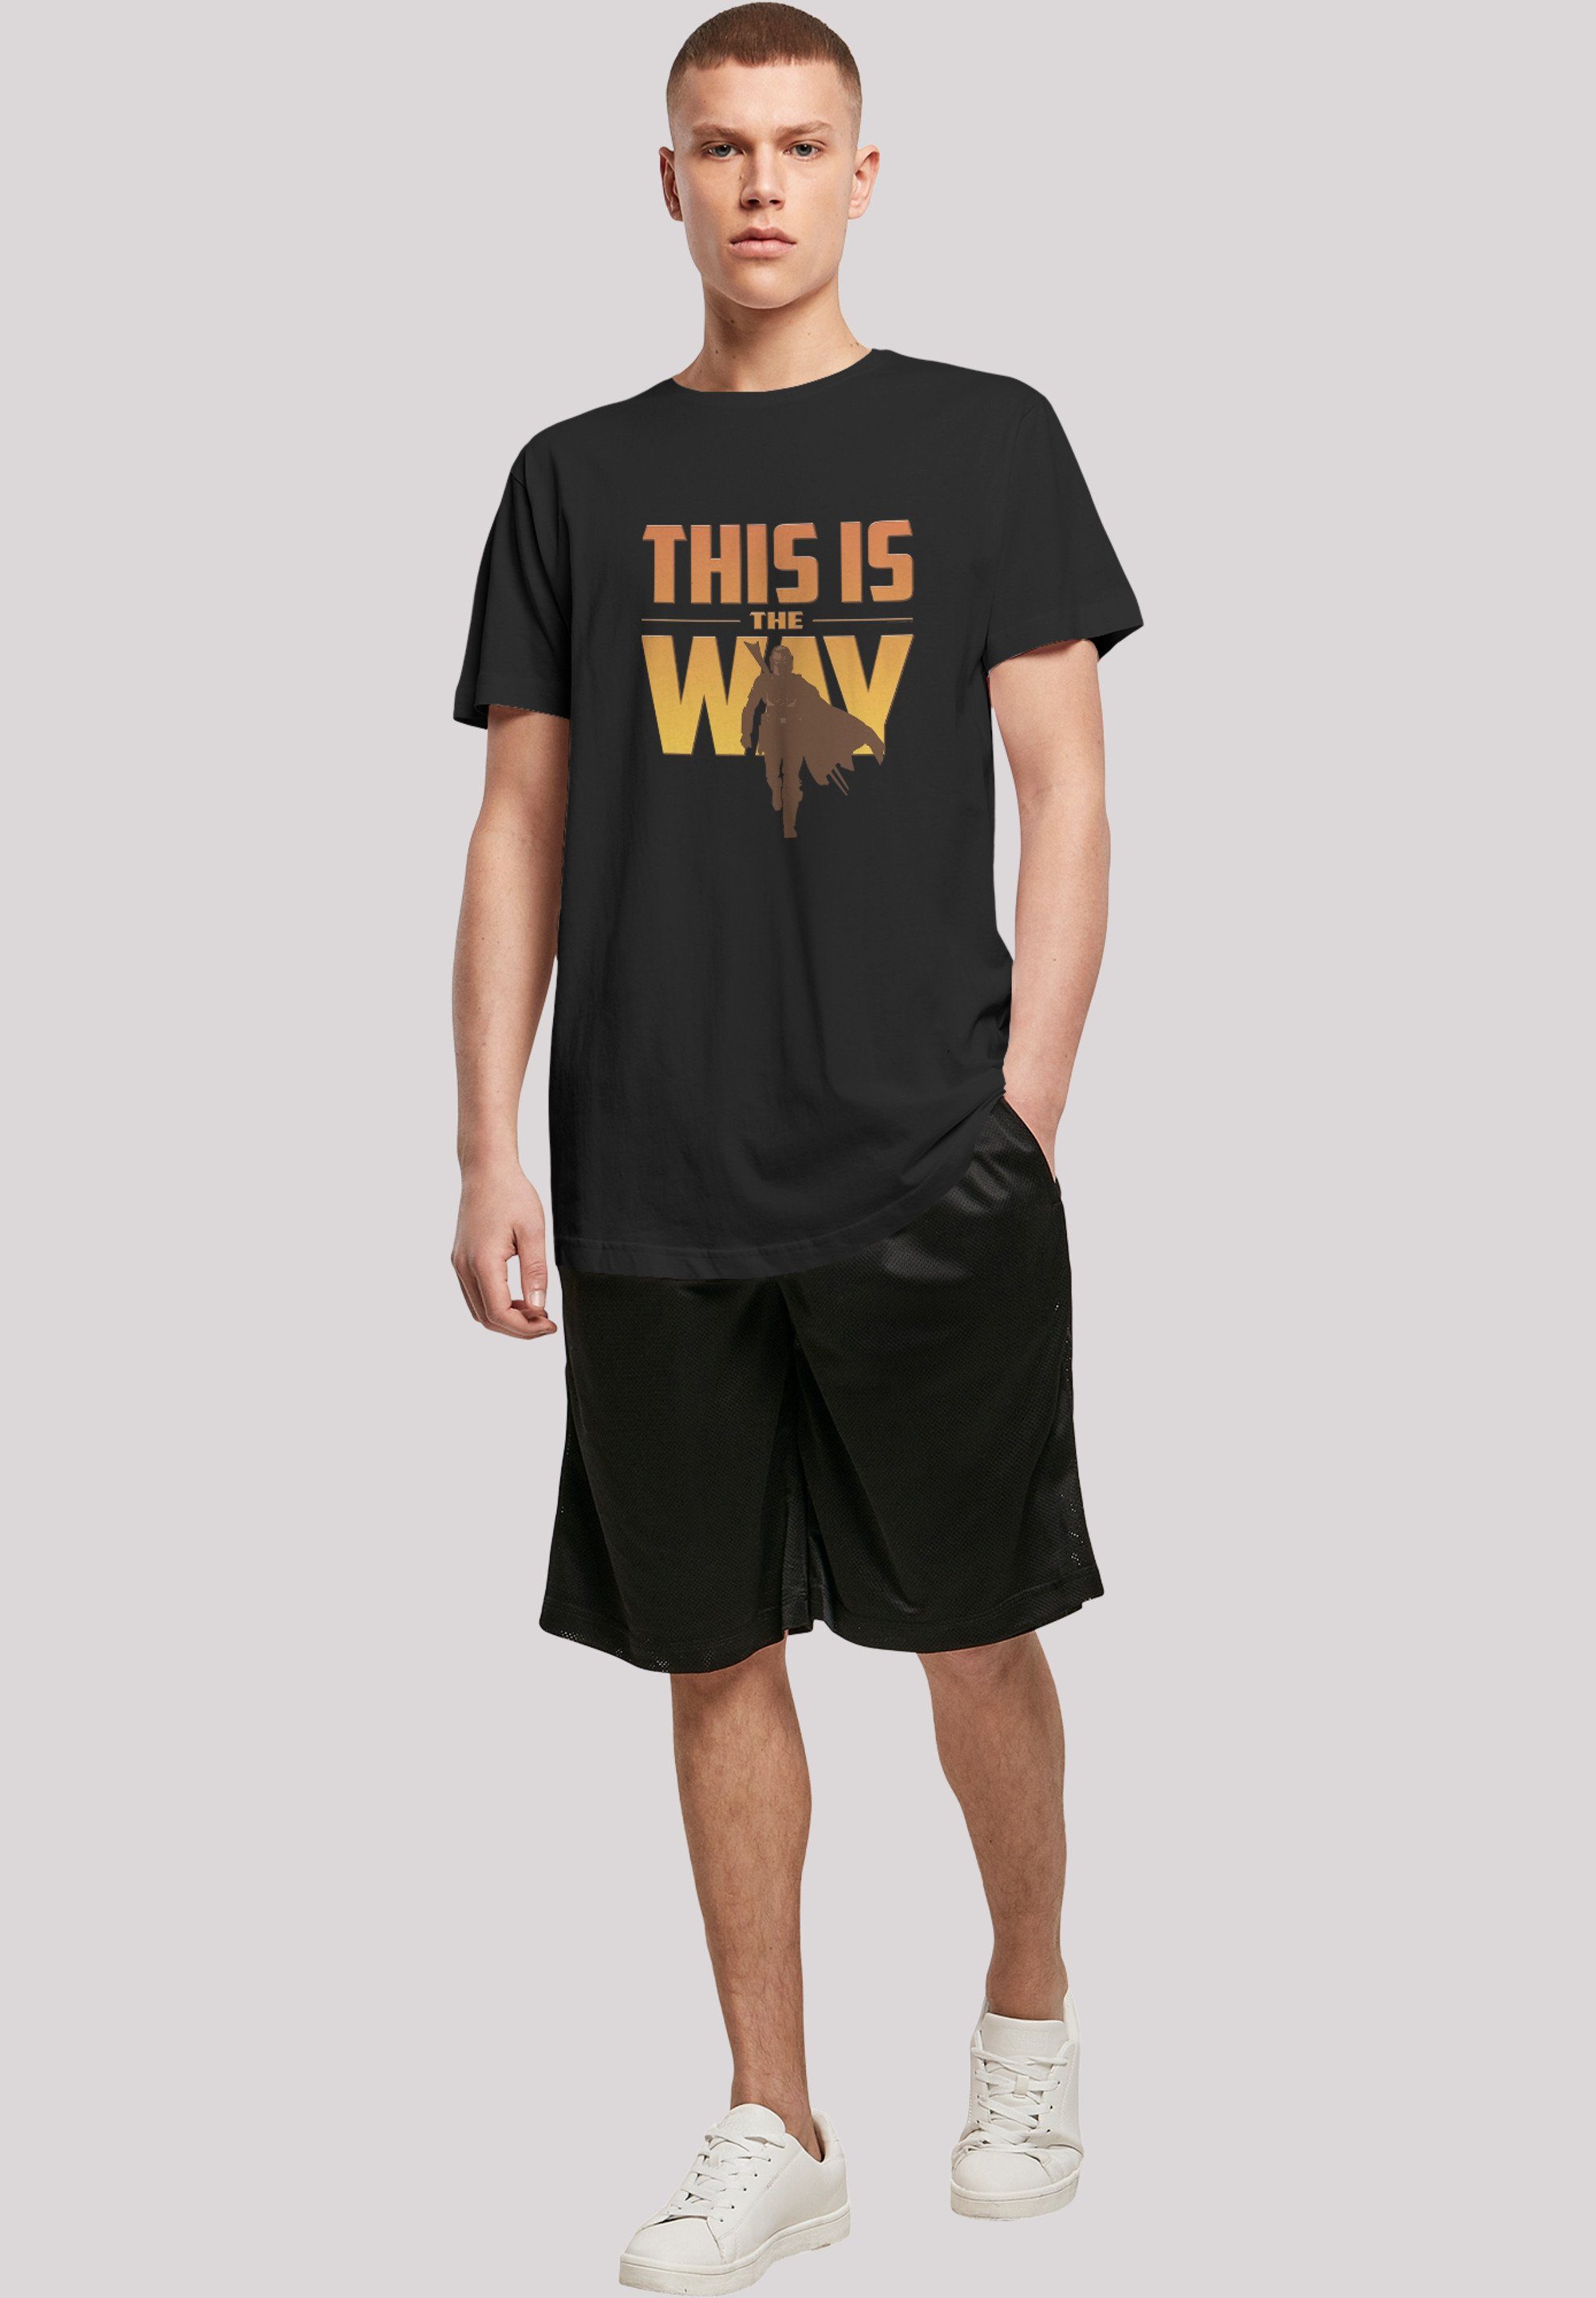 Mandalorian T-Shirt This F4NT4STIC The Is T Wars Way' 'Star Print Long Cut Shirt